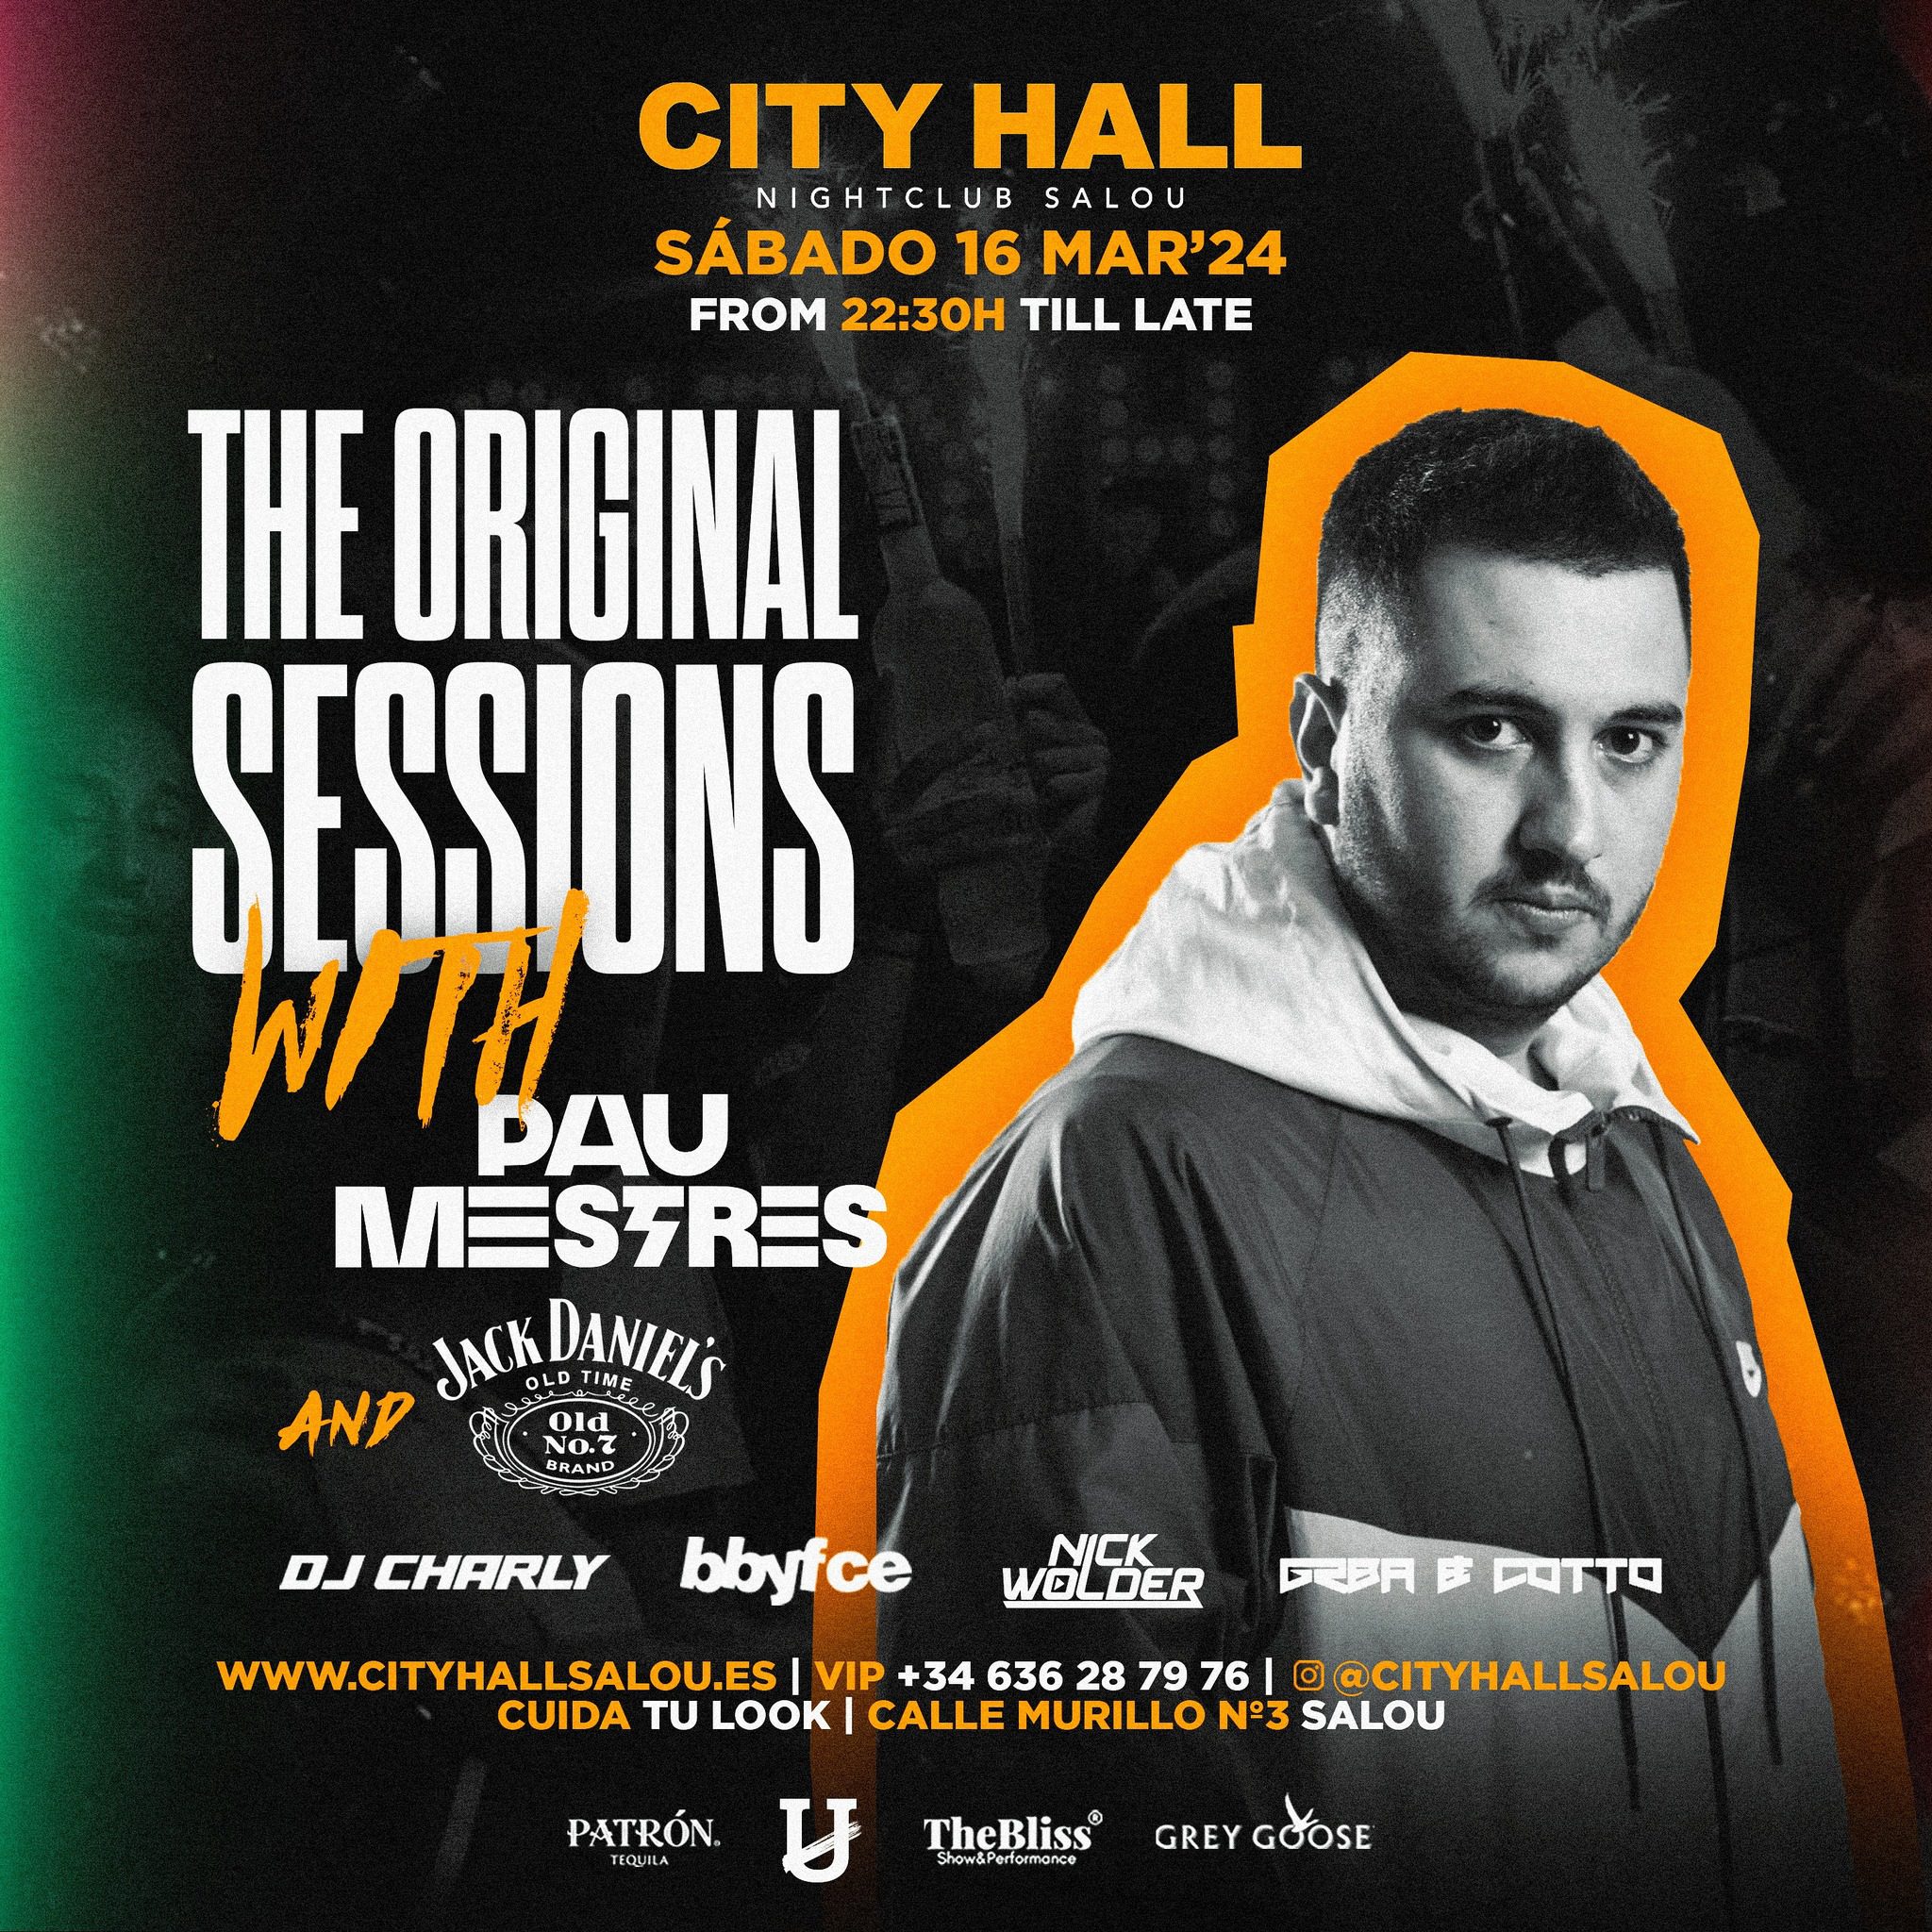 cityhall Sabado 16 de Marzo…The Original Sessions by @ cityhall Sábado 16 de Marzo…The Original Sessions by @...